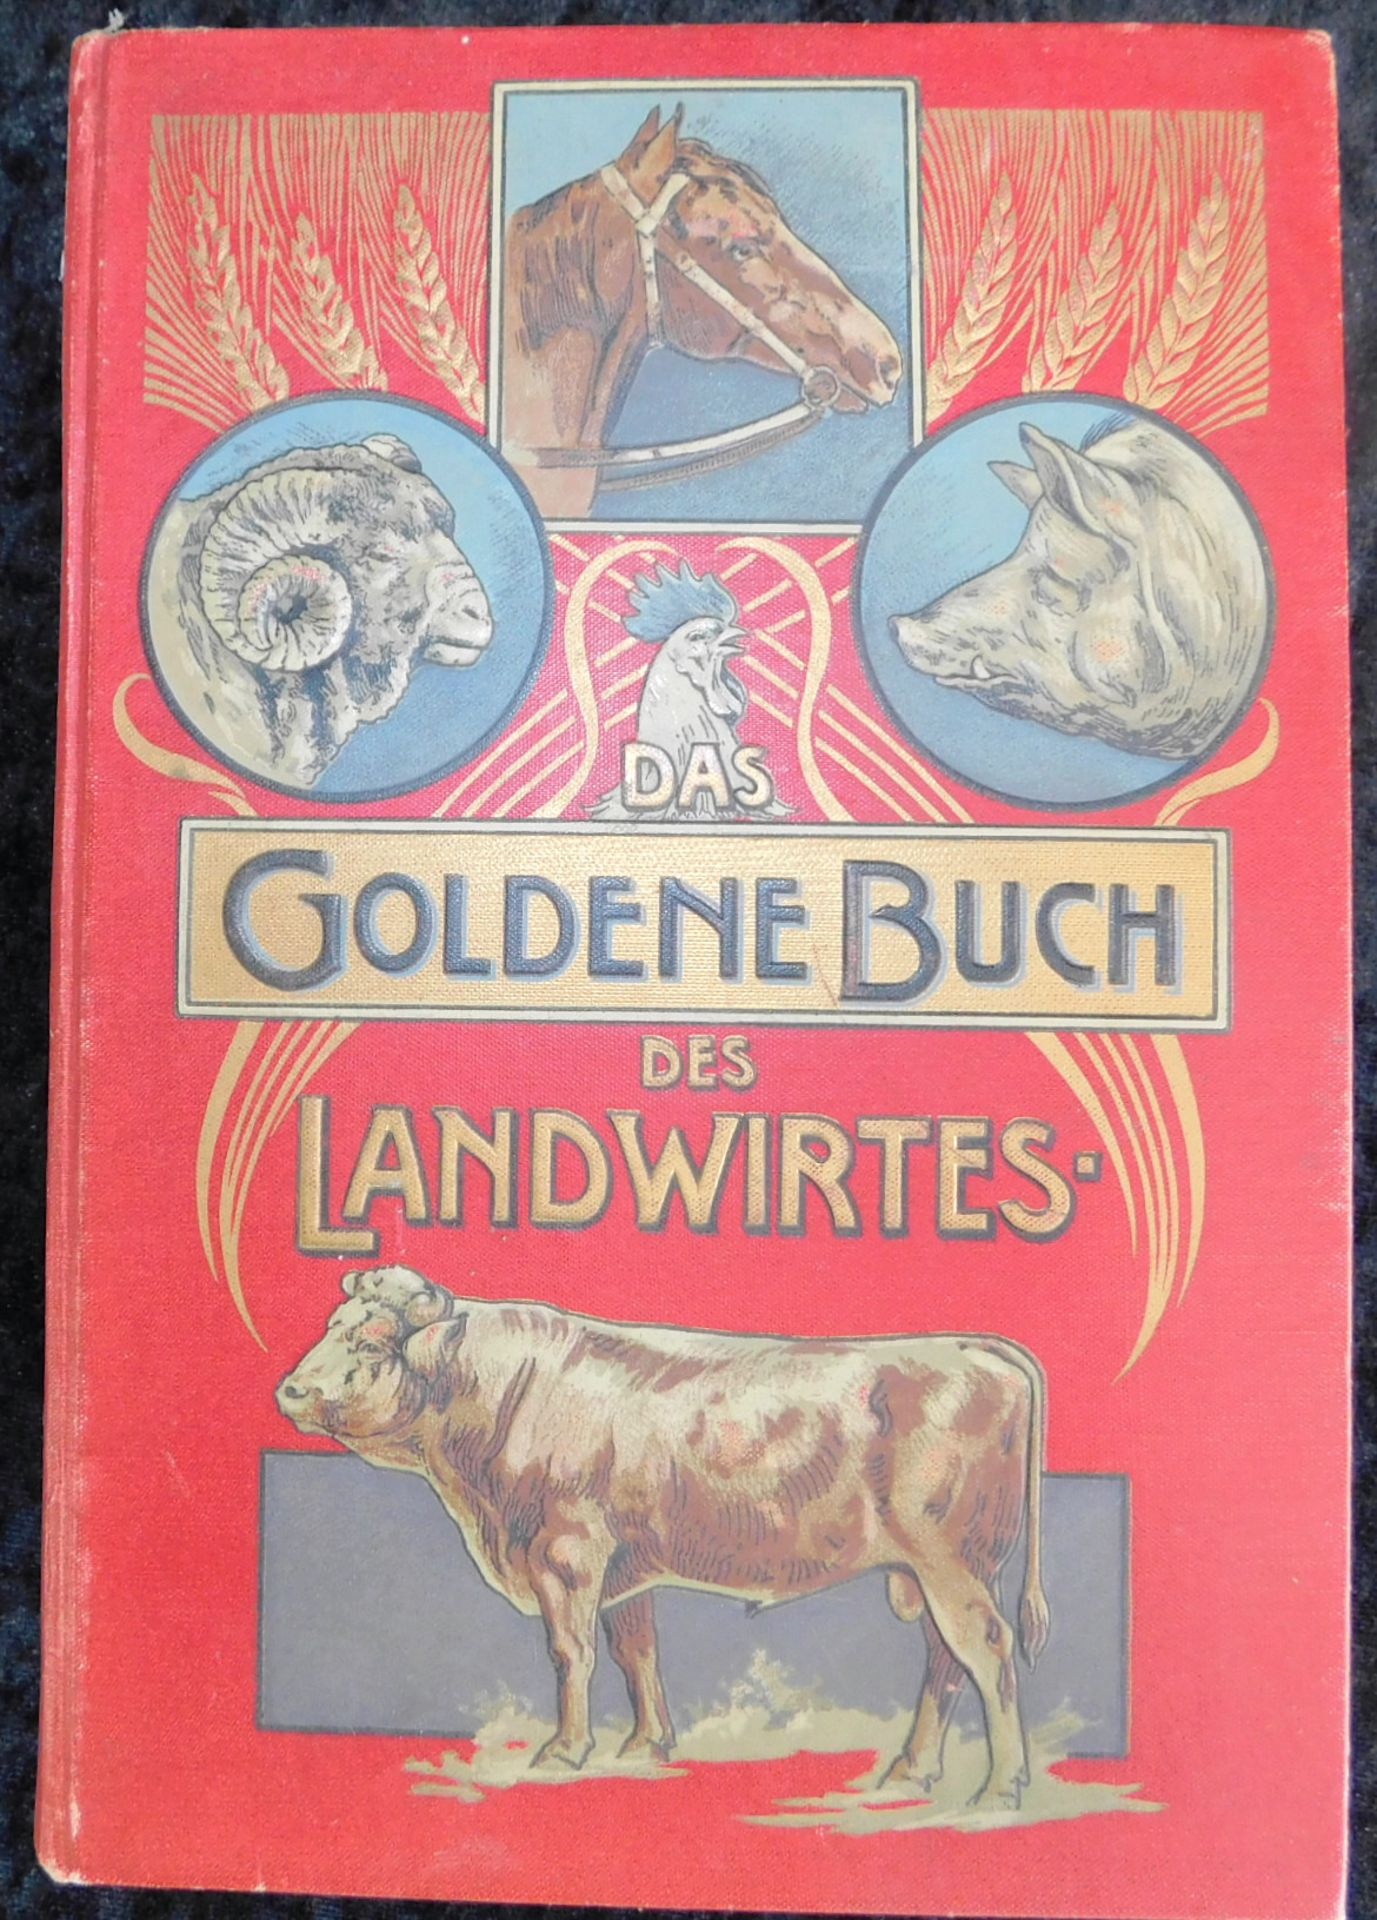 Das Goldene Buch des Landwirtes, Cäsar Rhan, 2 Bände, Deutsches Verlagshaus Bong & Co., Berlin, 1897 - Image 2 of 5